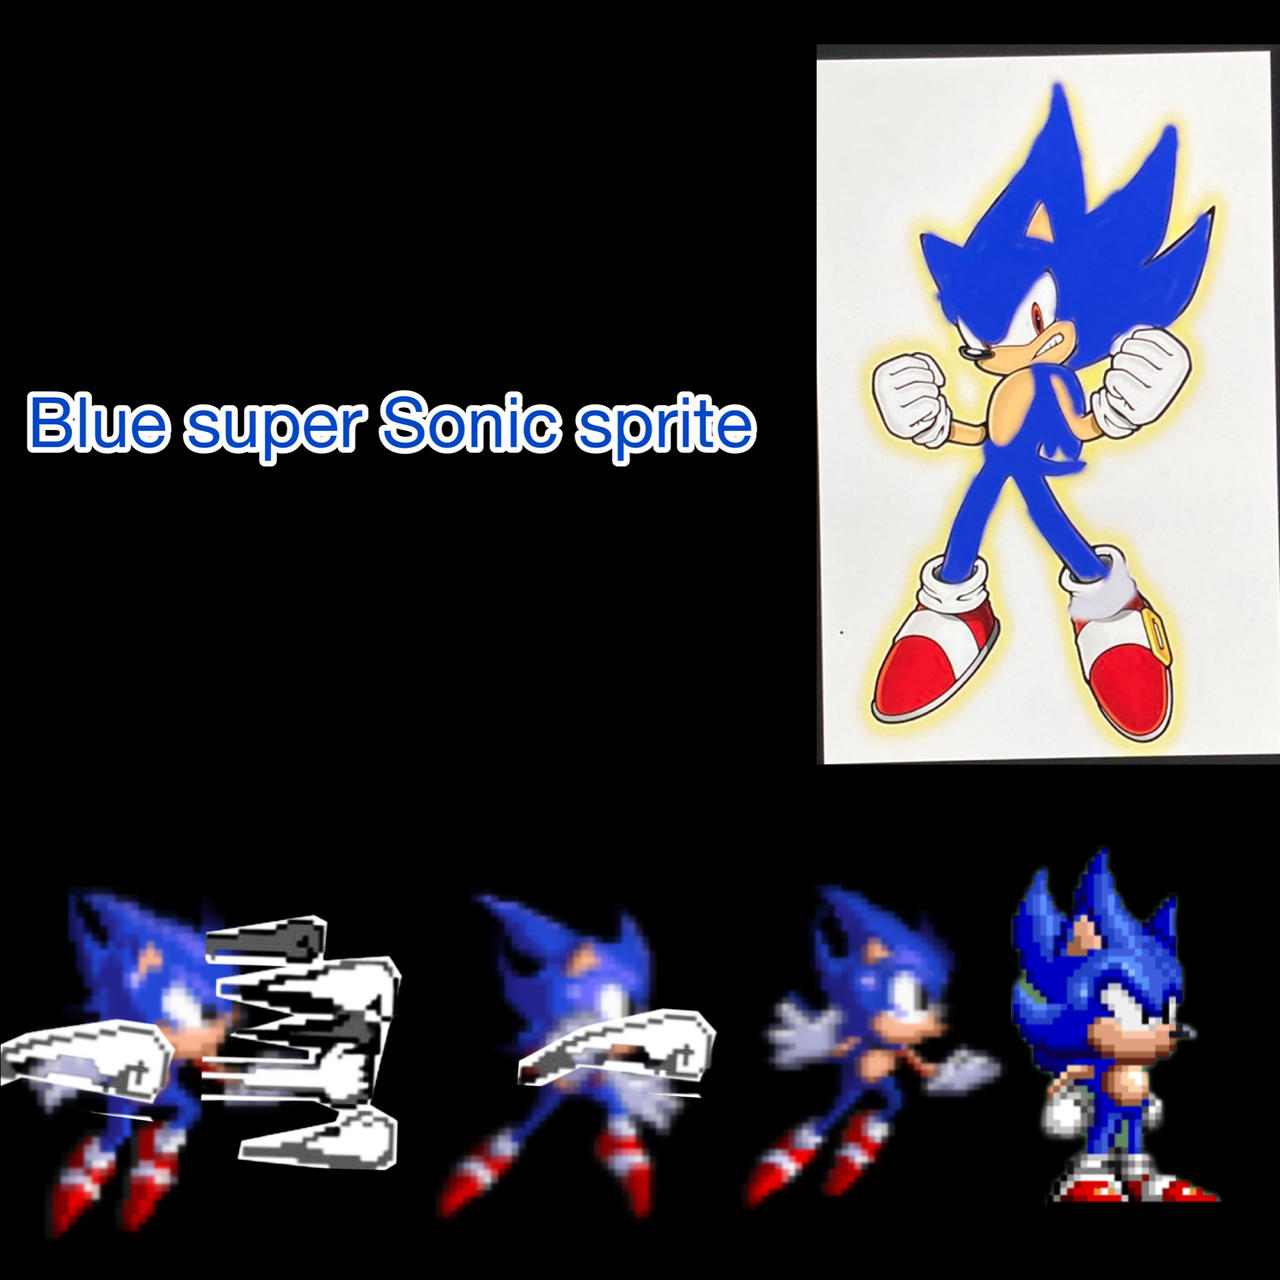 Super Sonic Blue Sprite Preview by Matheus30cs on DeviantArt